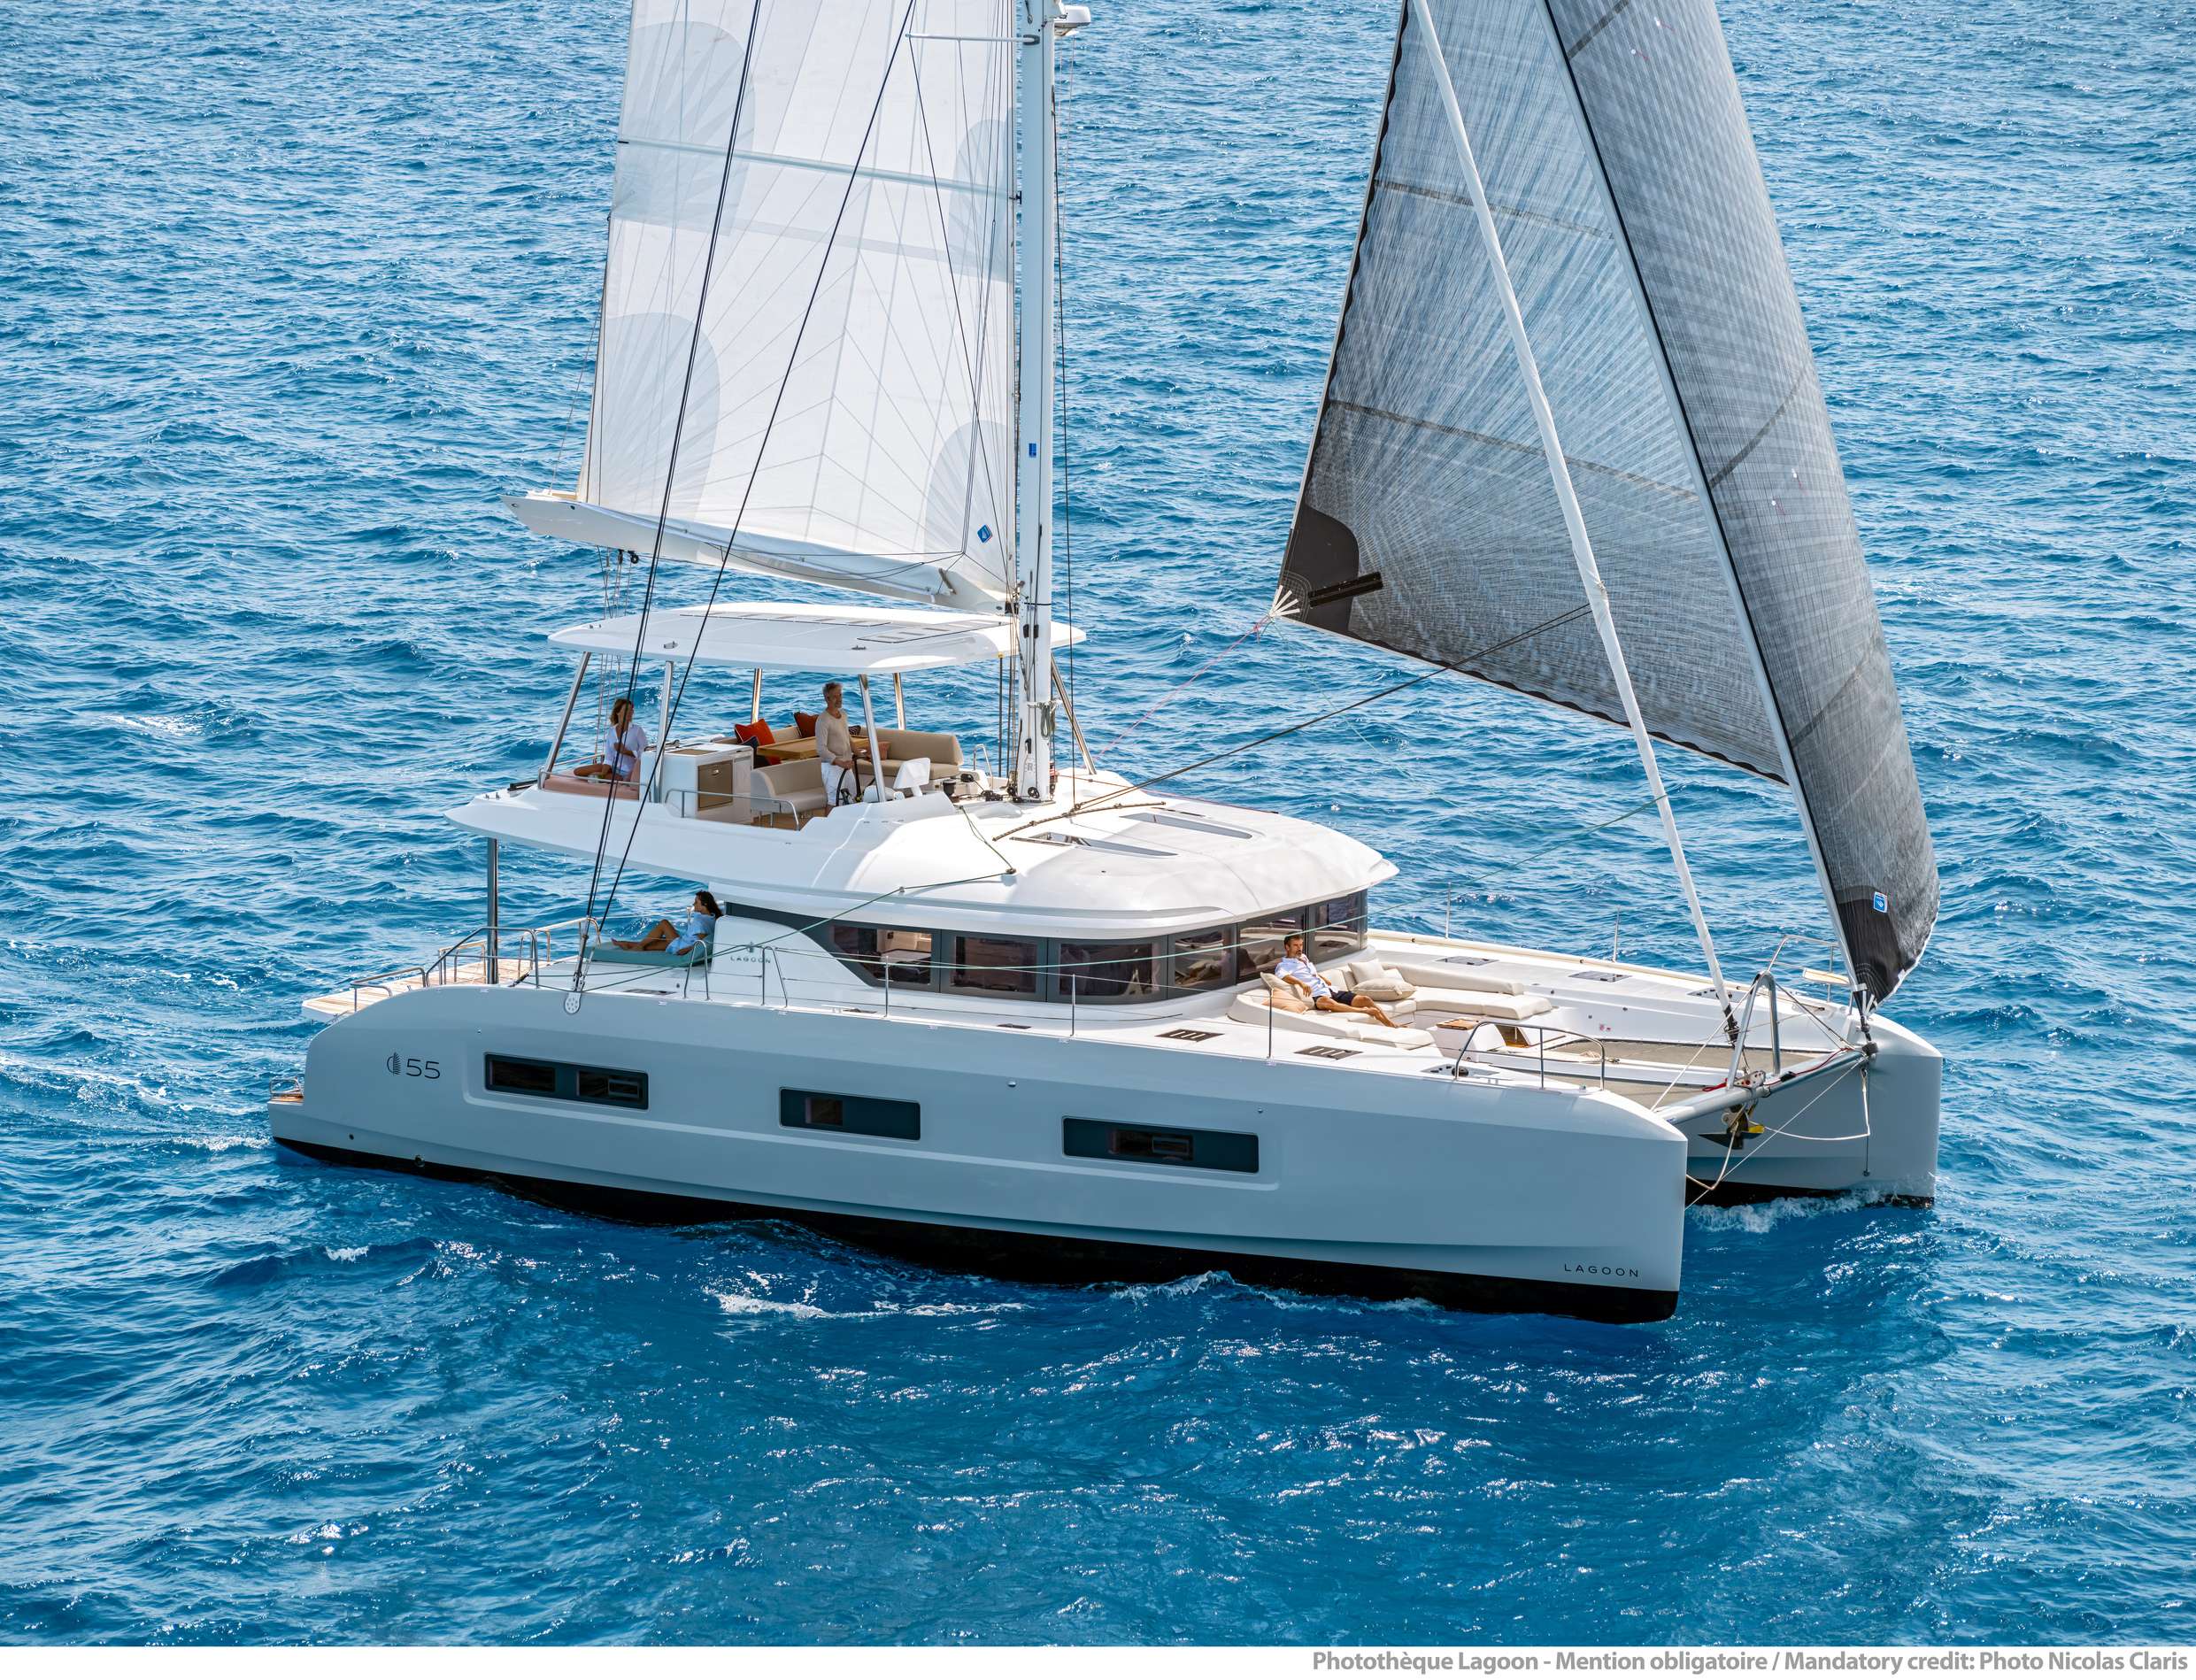 VALIUM 55 - Catamaran charter worldwide & Boat hire in Greece 1